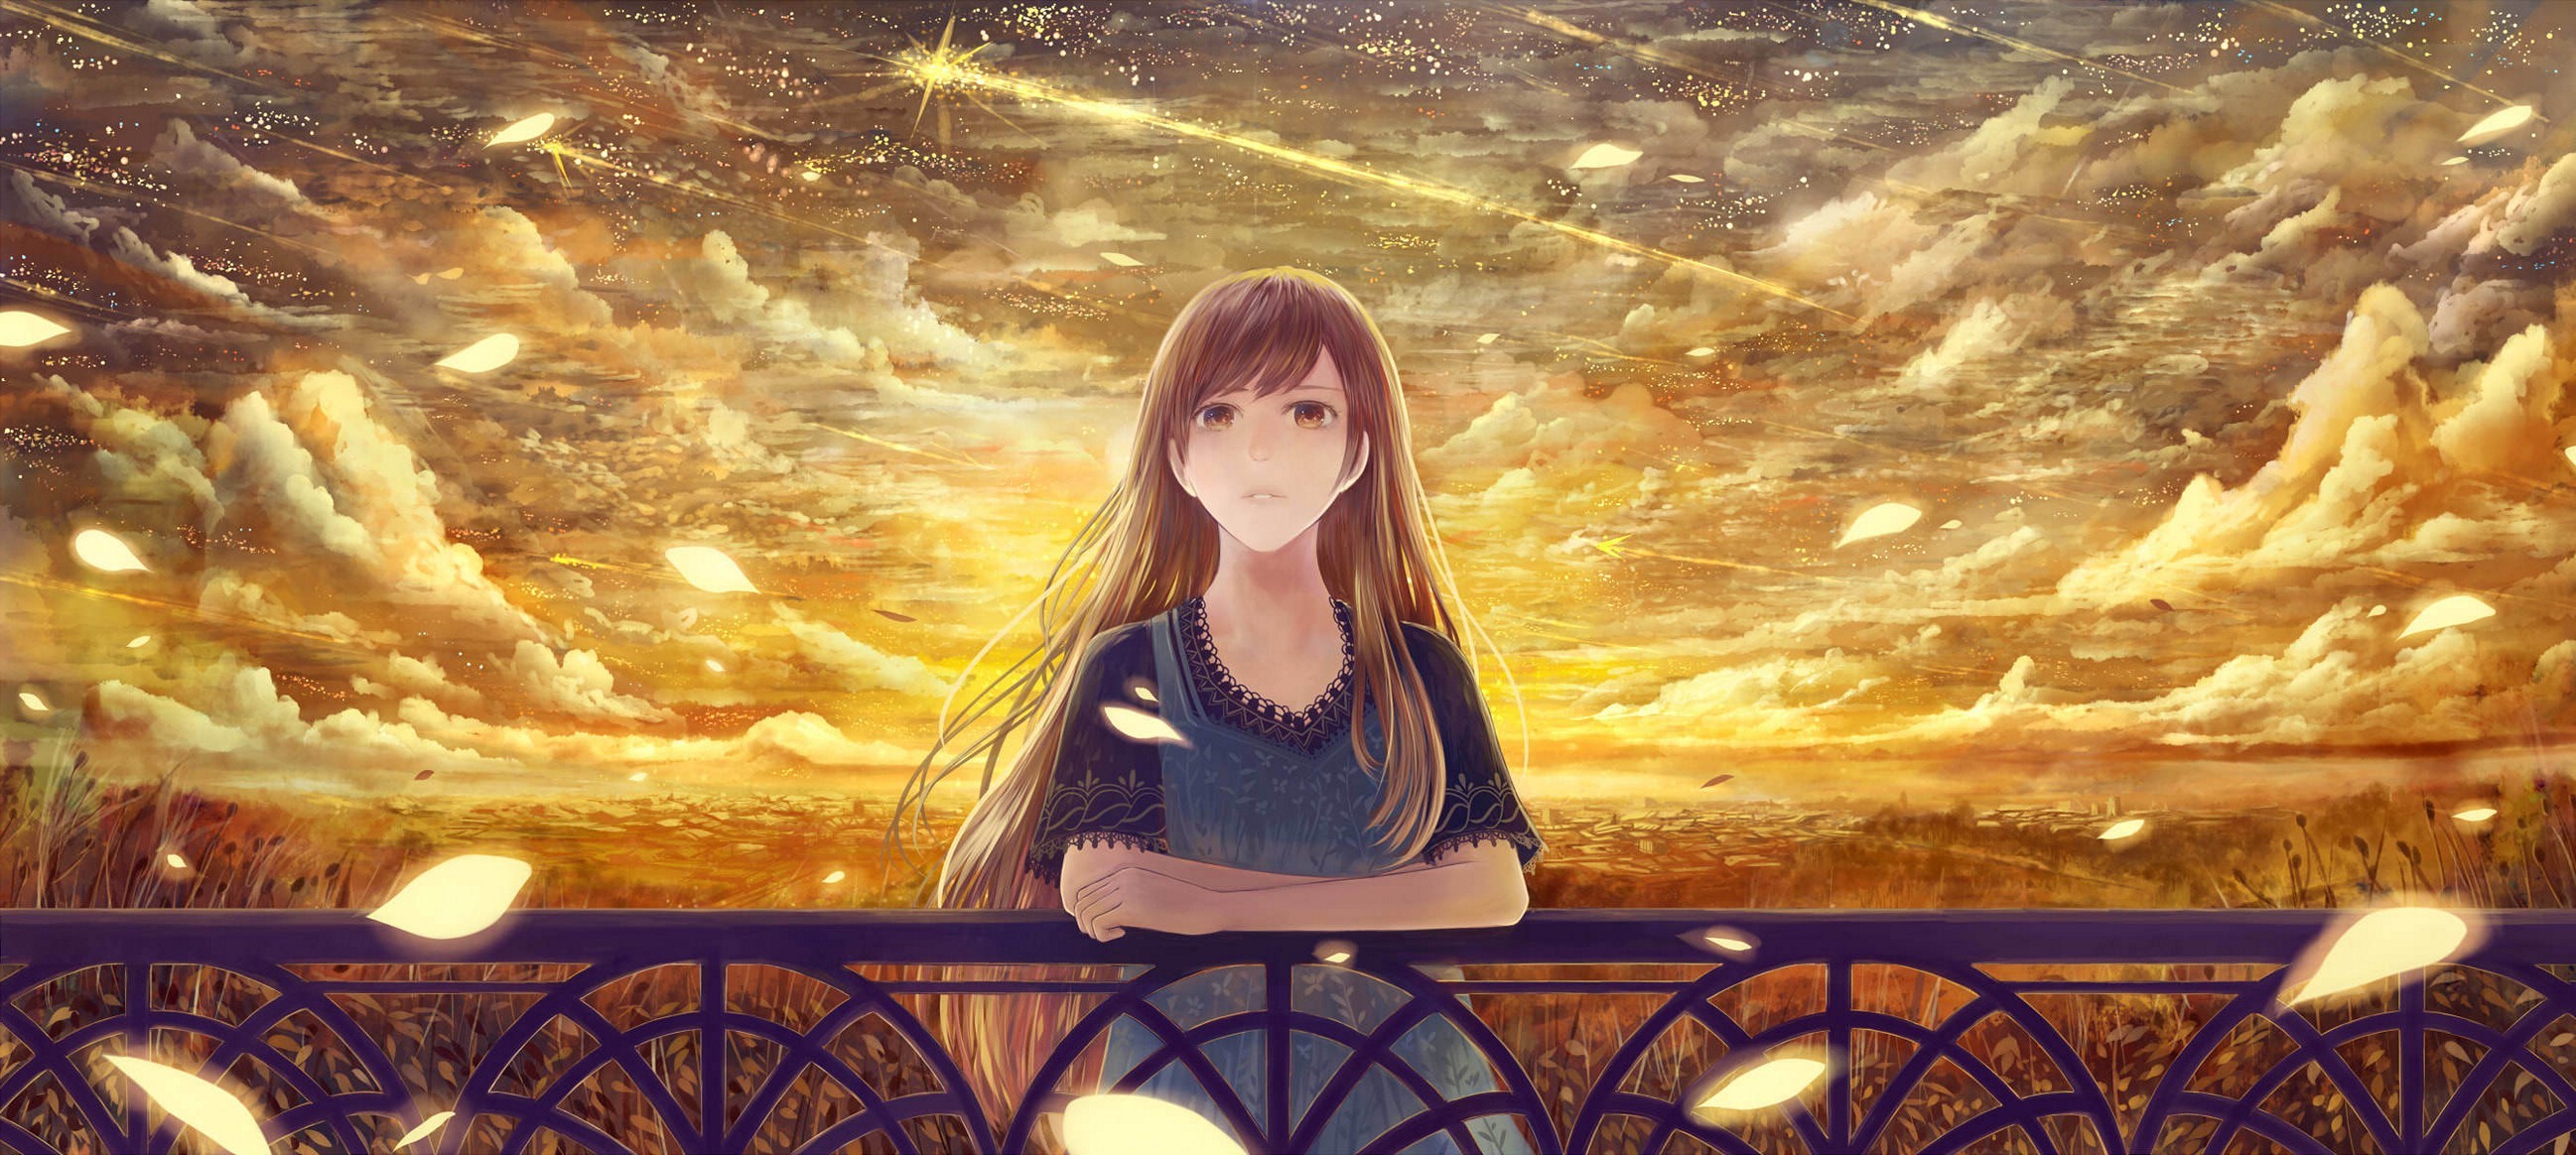 Girl Fence Starry Sky Majestic Sad Anime Wallpaper On The Bridge Anime